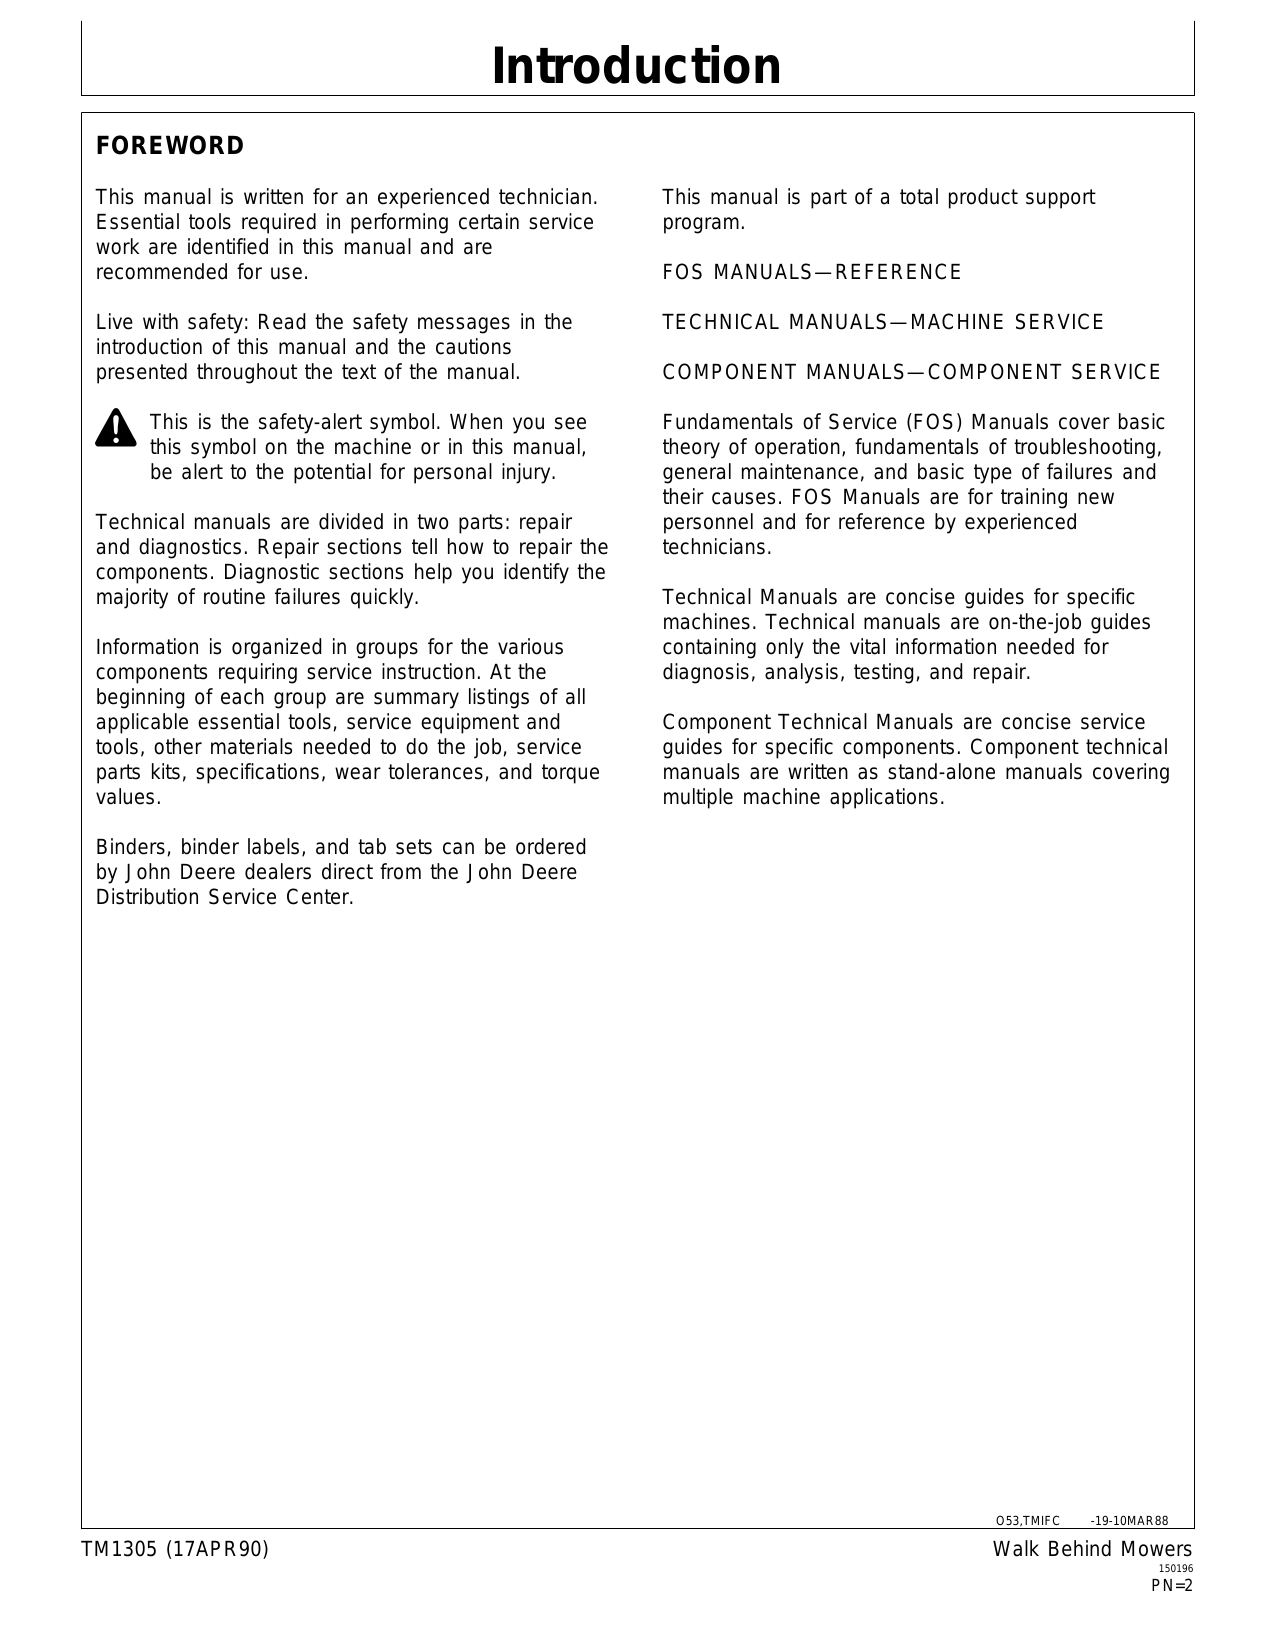 John Deere 32, 36, 48, 52 Inch Walk-Behind Mower Technical Manual Preview image 2